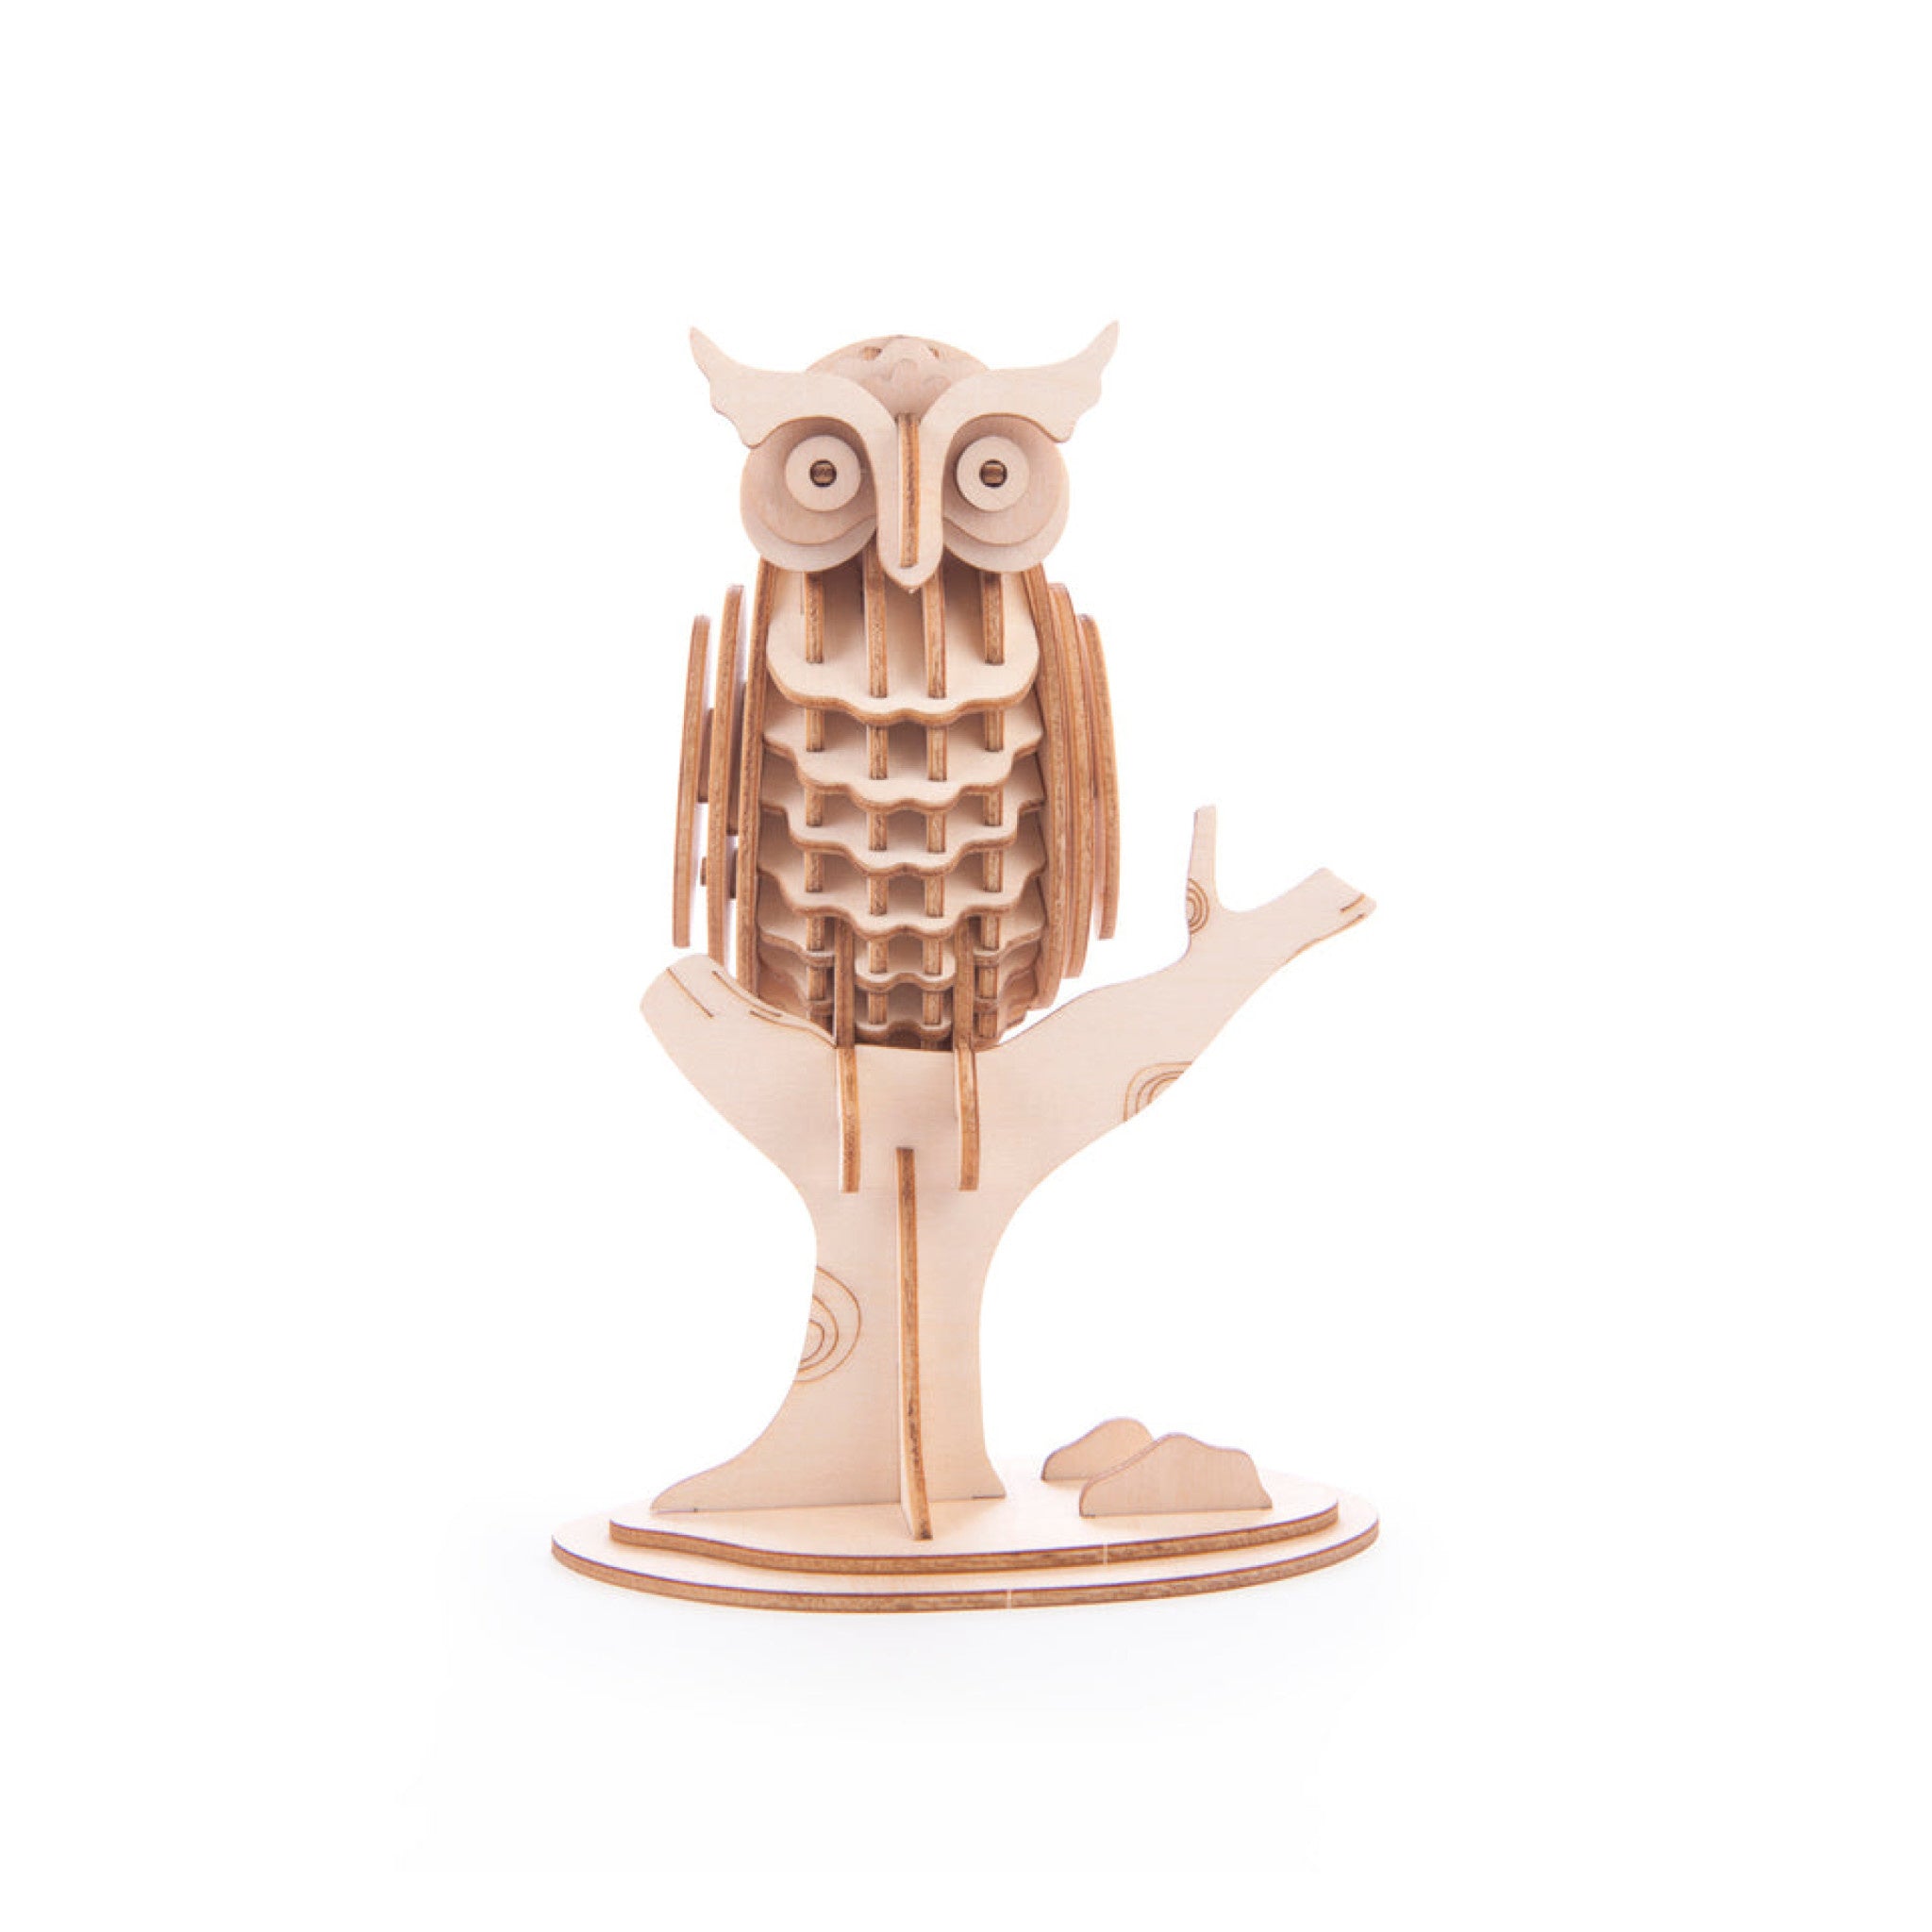 Owl 3D Wooden Puzzle - Wynwood Walls Shop